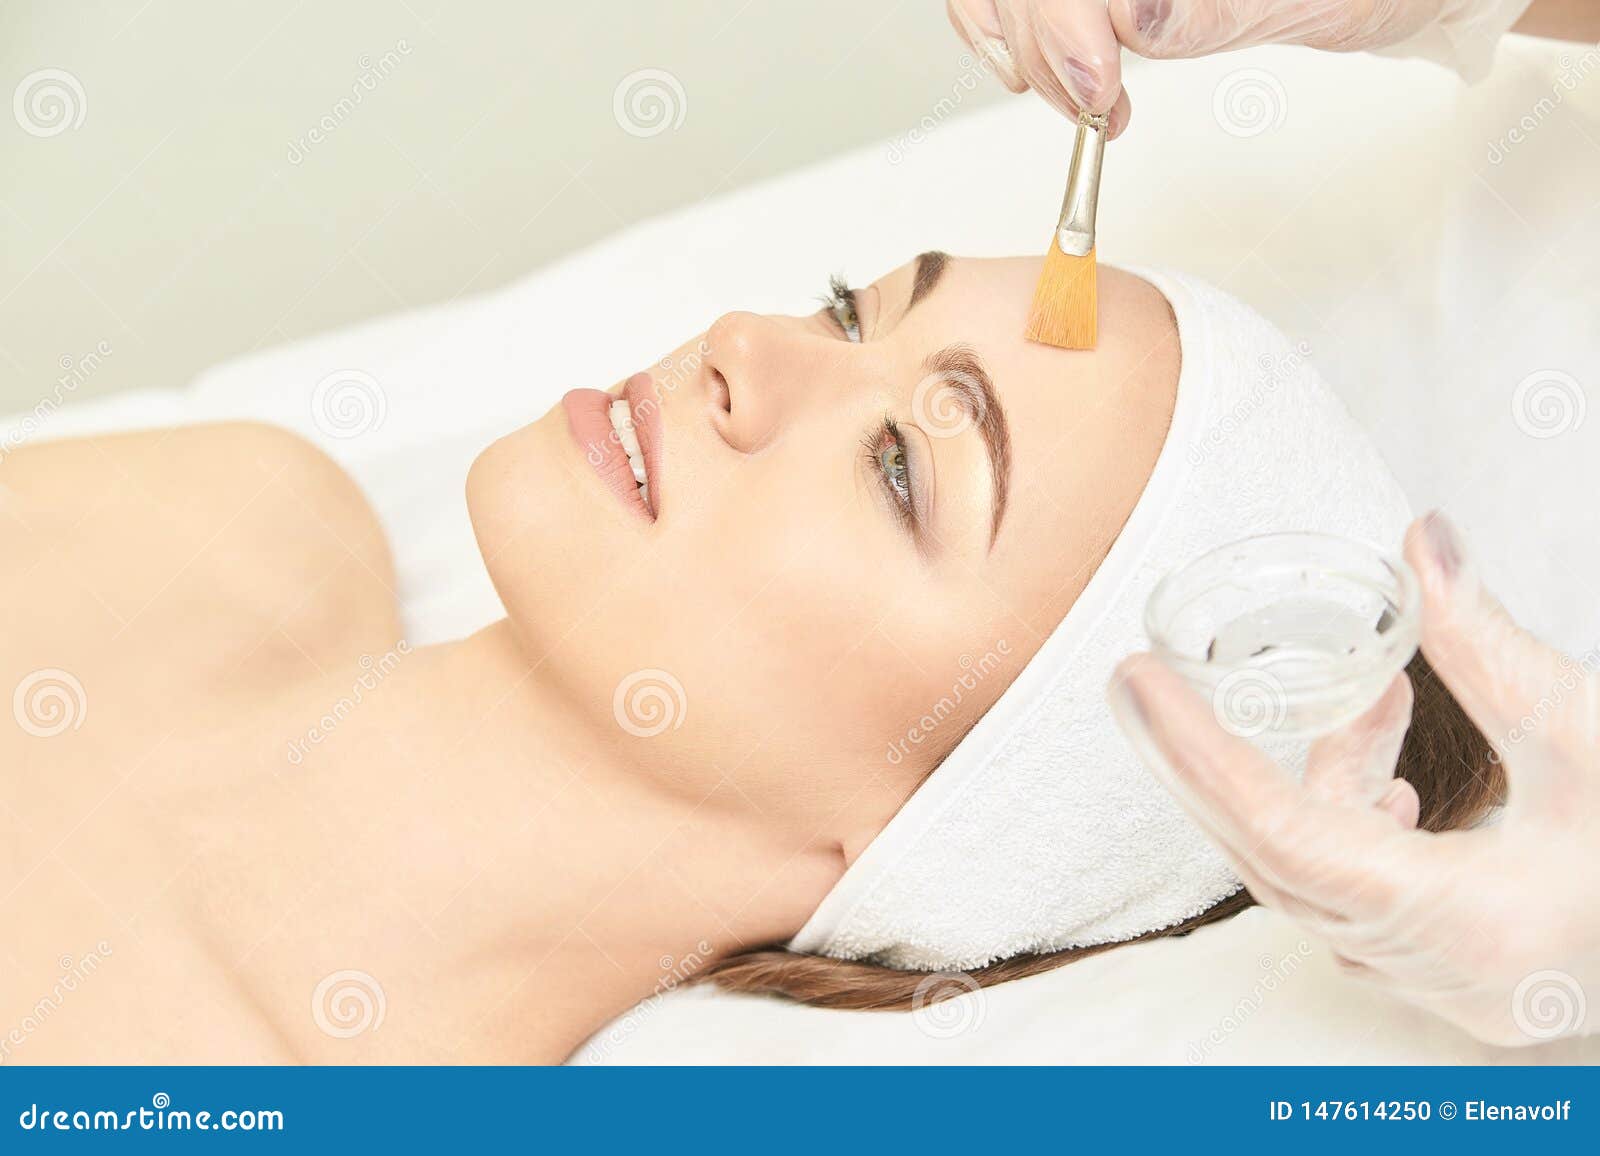 facial brush peel retinol treatment. beauty woman peeling procedure. cosmetology young girl therapy.hyaluronic acid